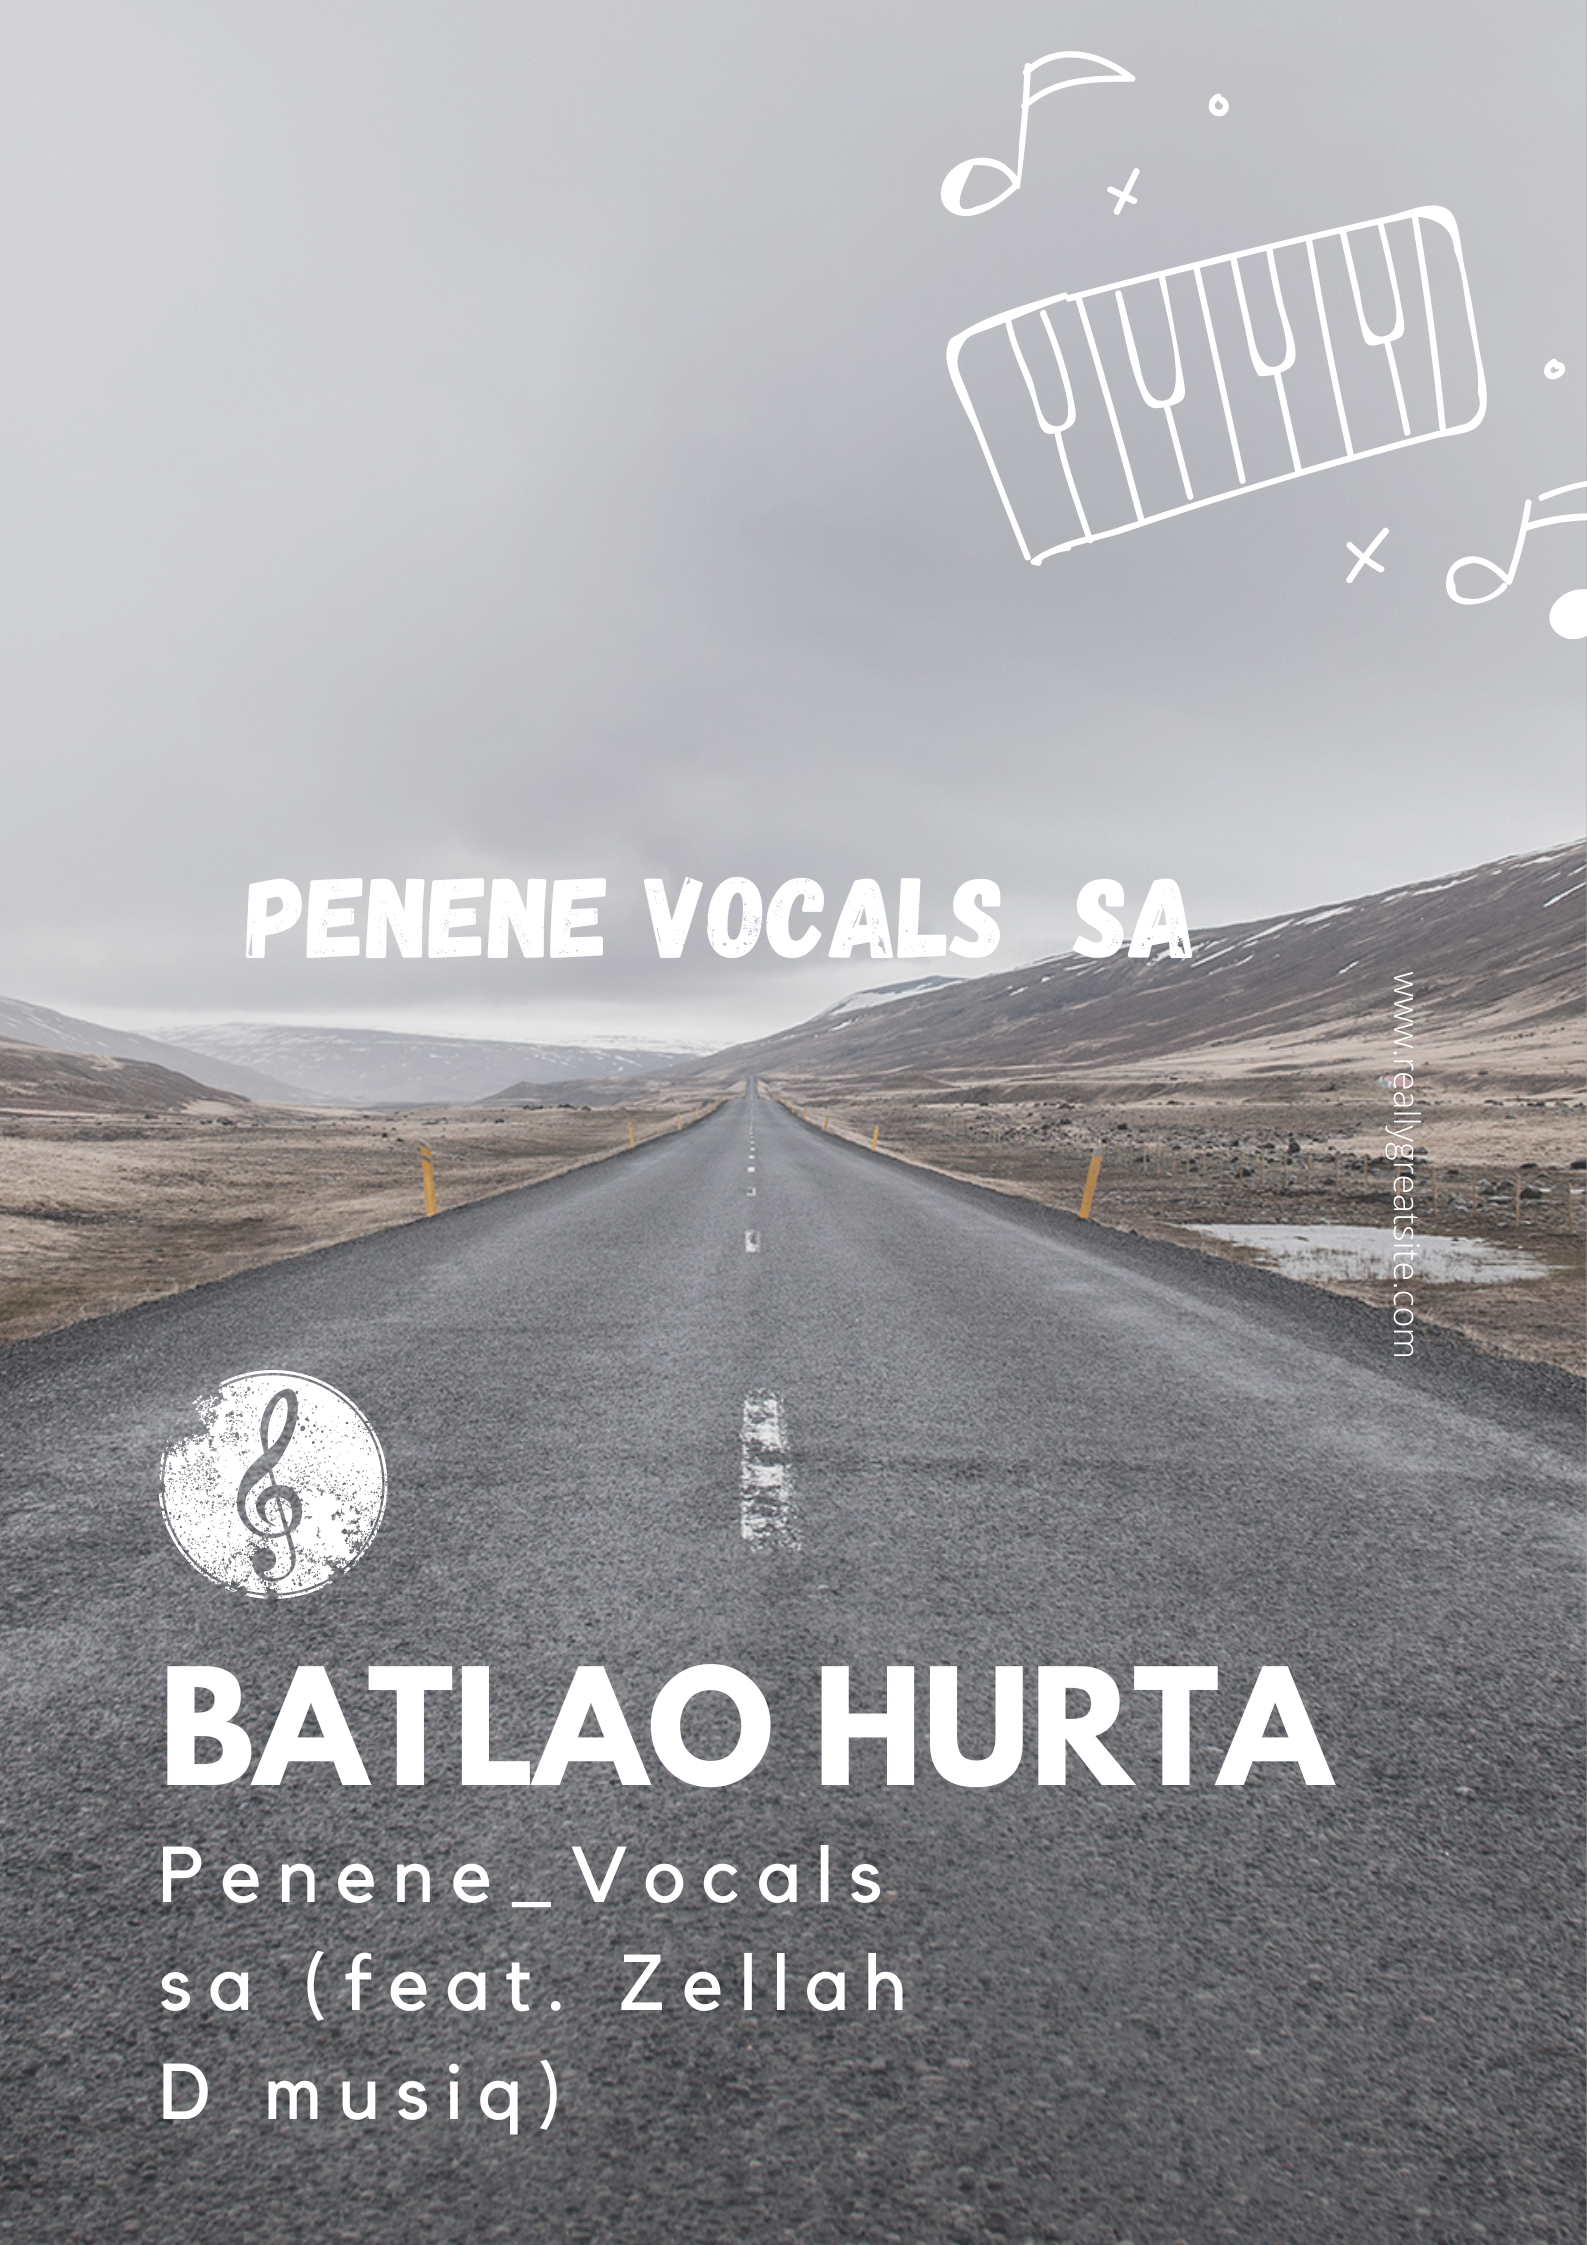 Batlao hurda_-_penene vocals sa(feat. Zellah d musiq) Image